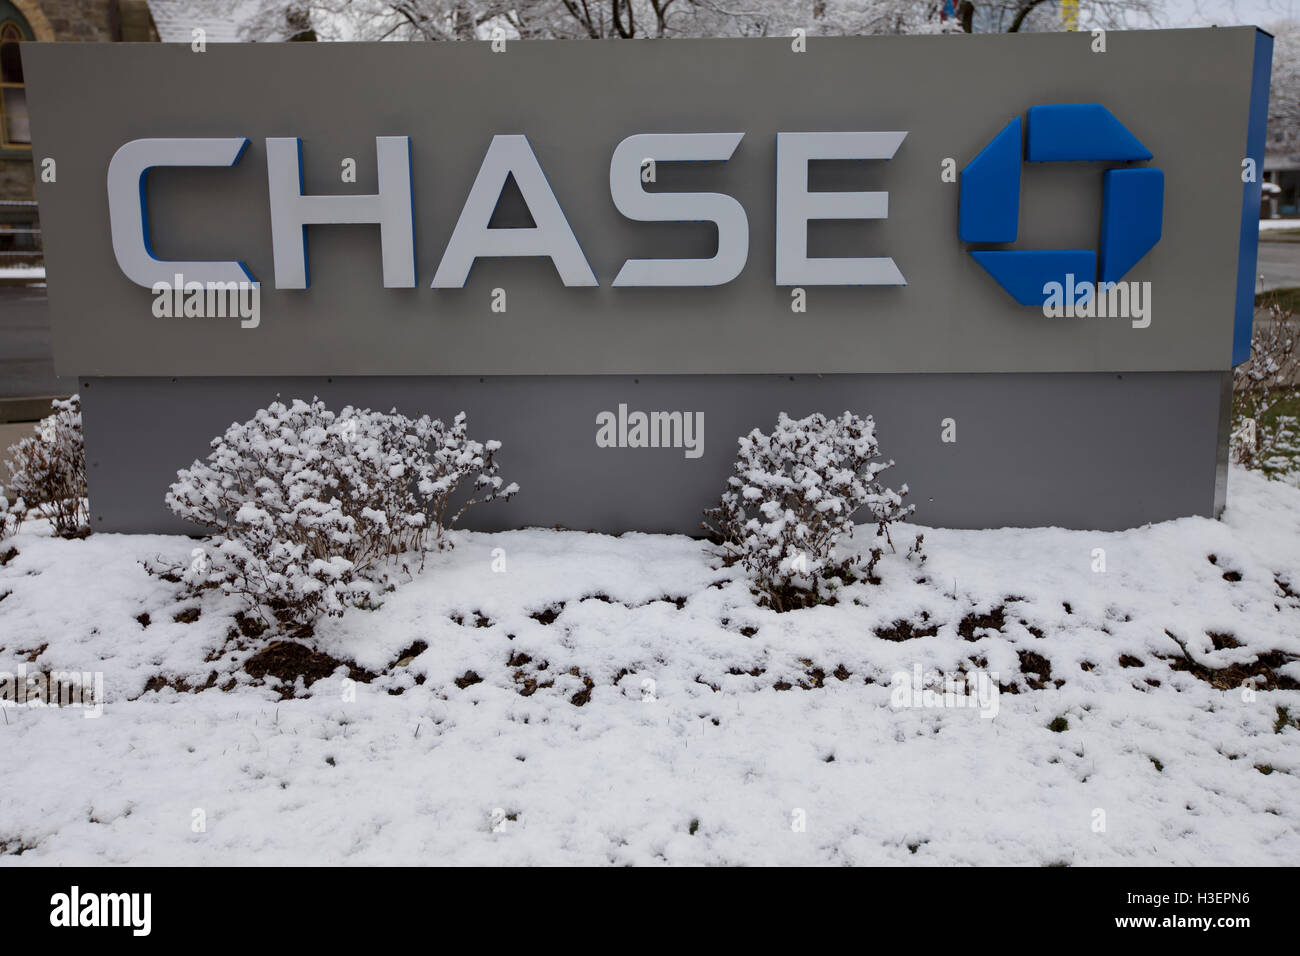 Chase Bank in Stamford, Stamford, USA  New York - March 21: Chase Bank branch in Stamford, United States America. Stock Photo